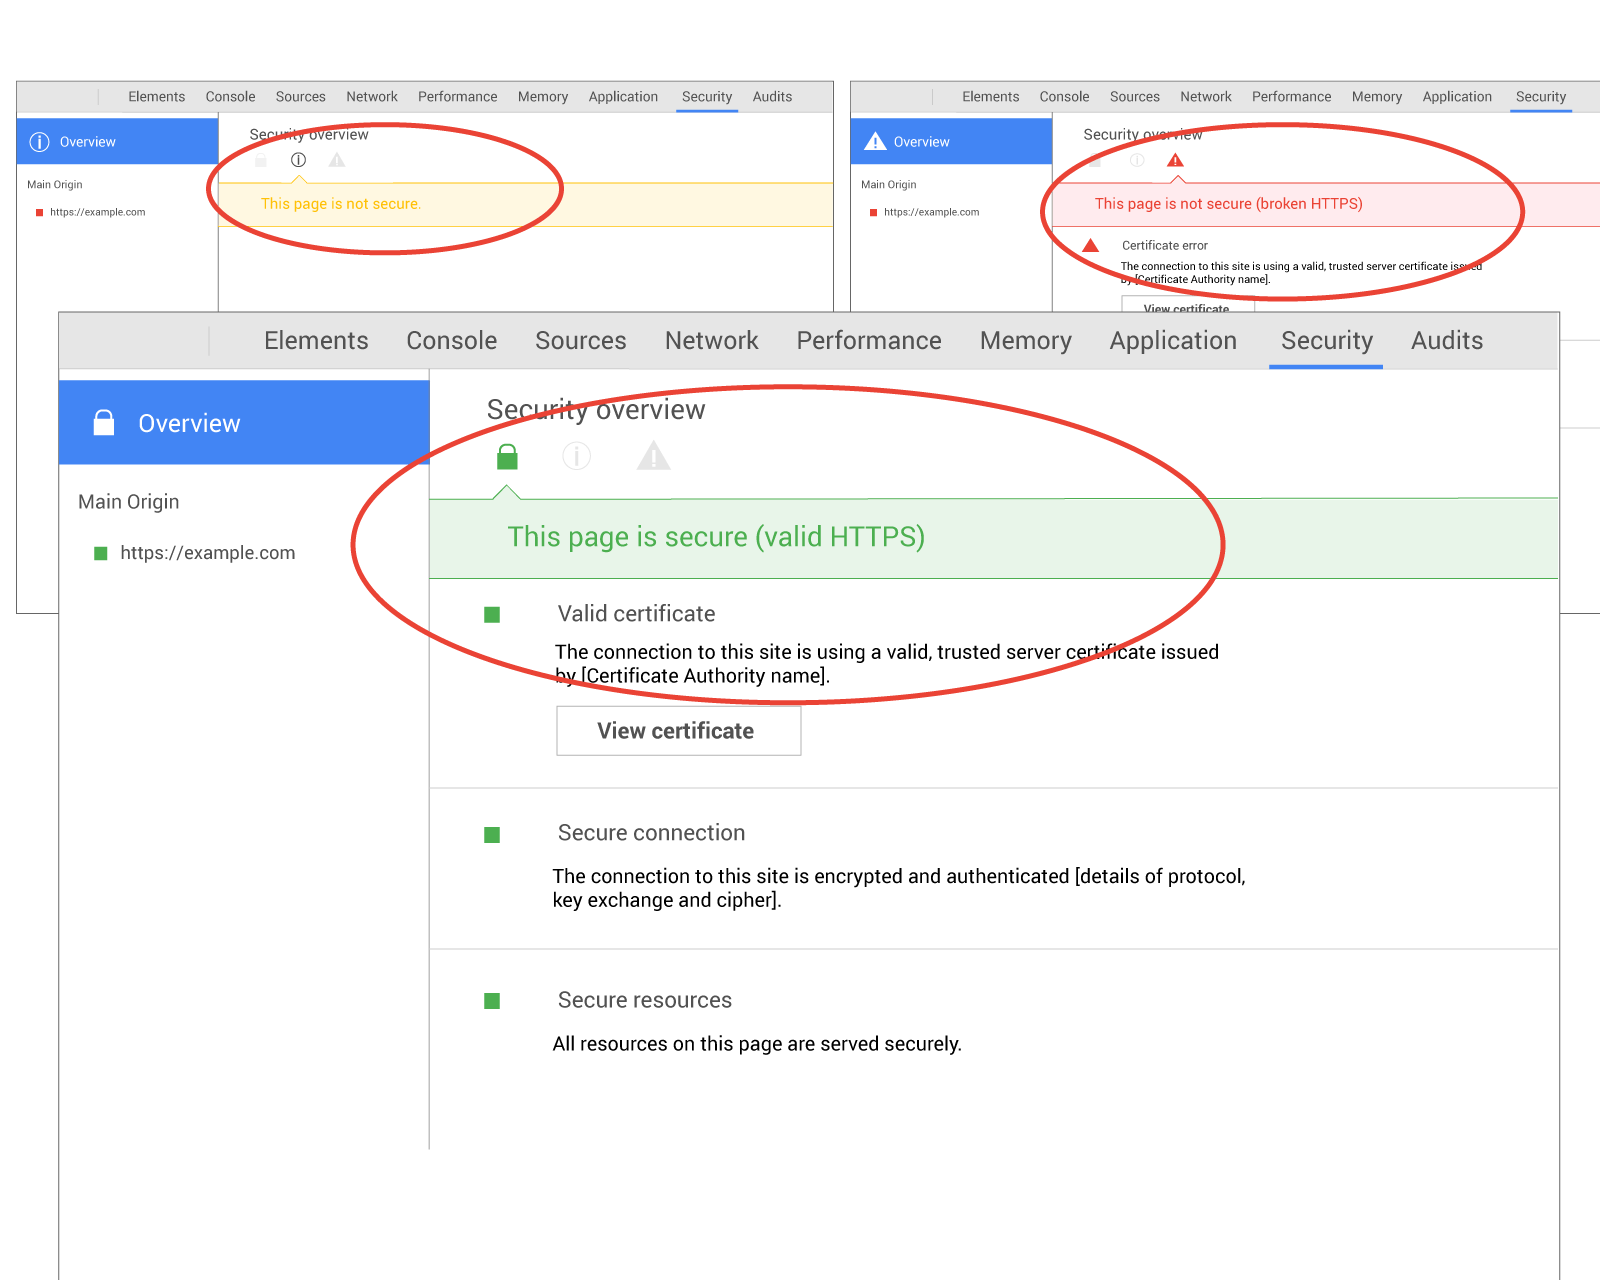 google chrome security update